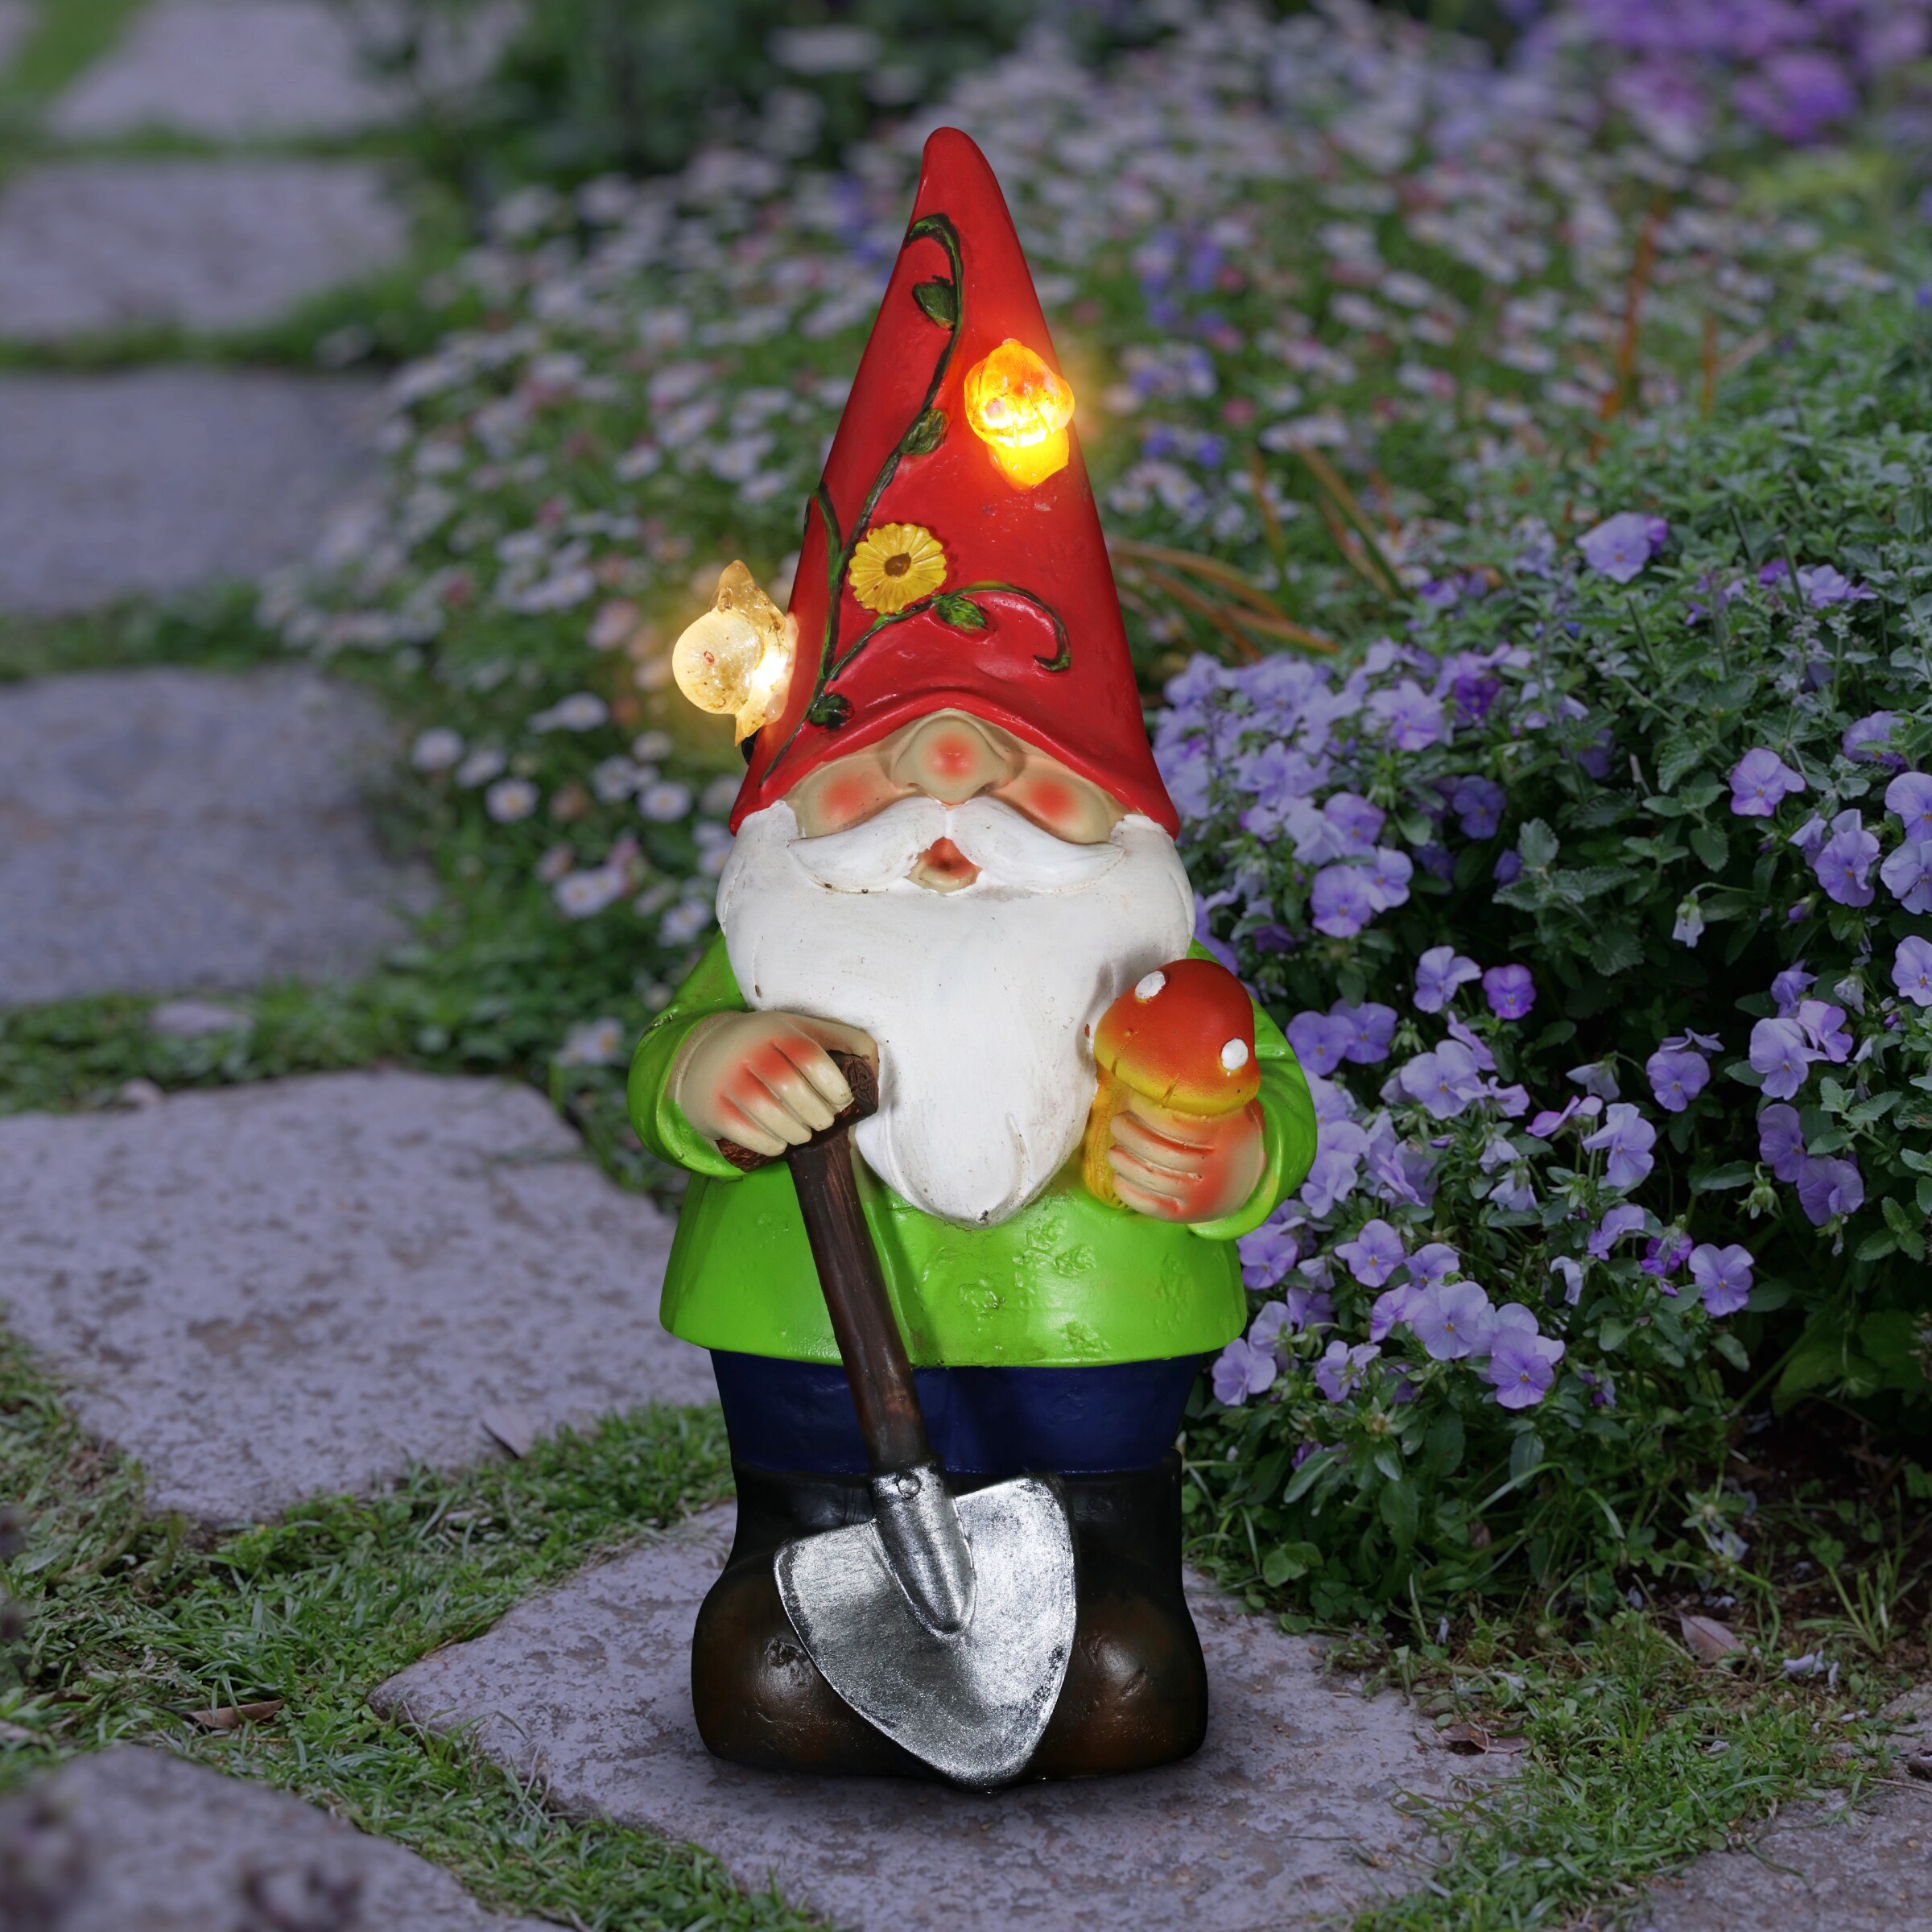 Garden Ornament Ceramic Gnome Stone Effect 48 cm Tall Outdoor or Indoor 